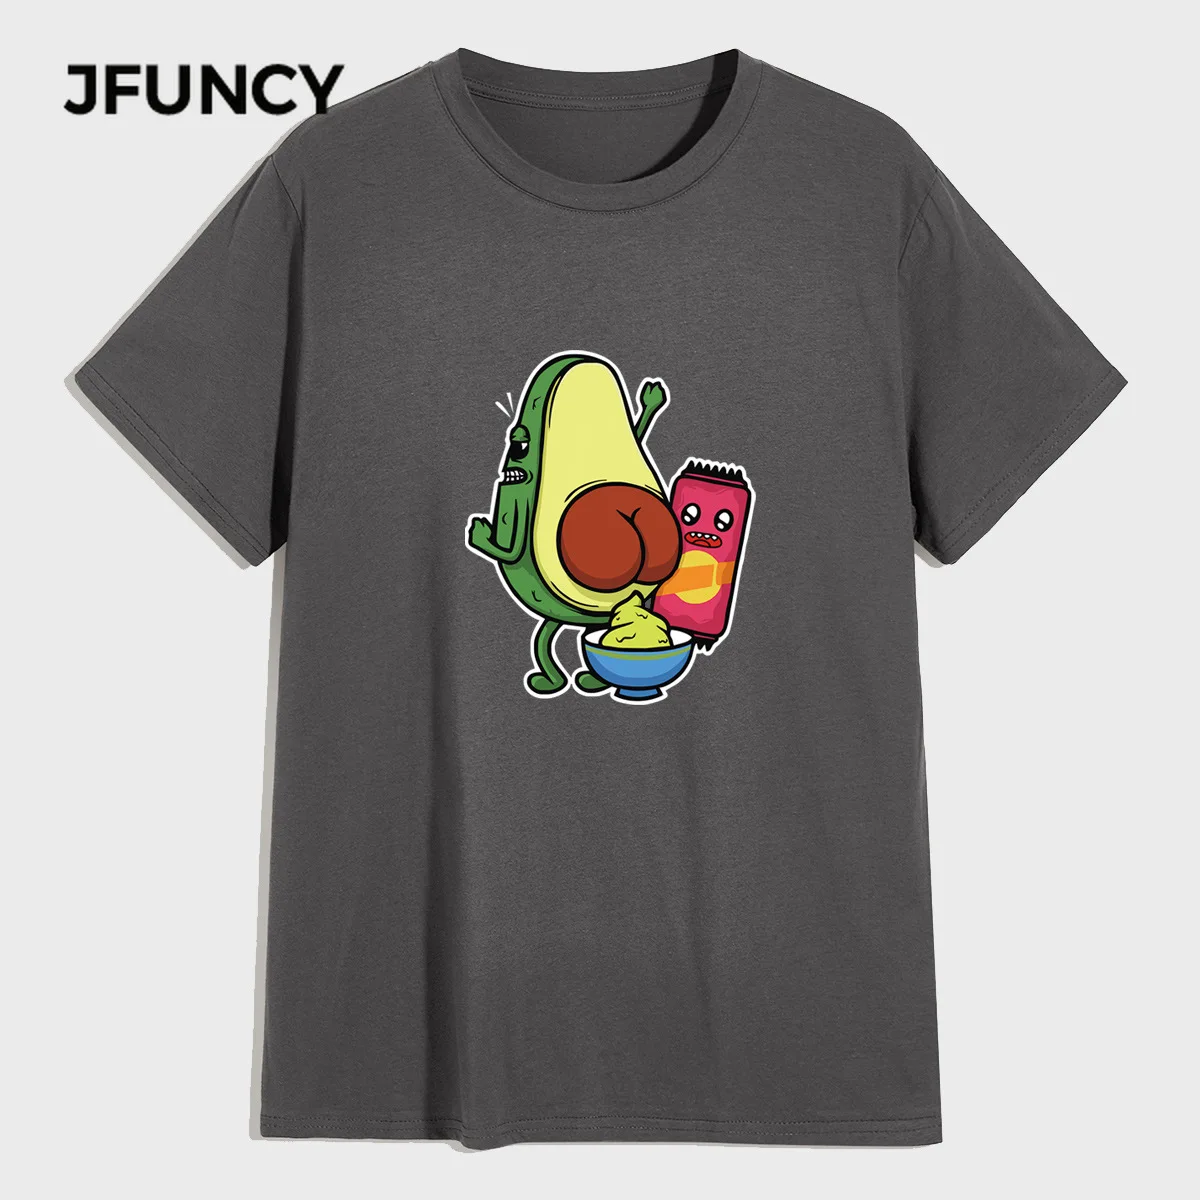 JFUNCY Plus Size Men T-shirts 2020 Summer Funny Cartoon Printed T Shirt Male Short Sleeve Cotton Tee Top Man Casual Loose Tshirt